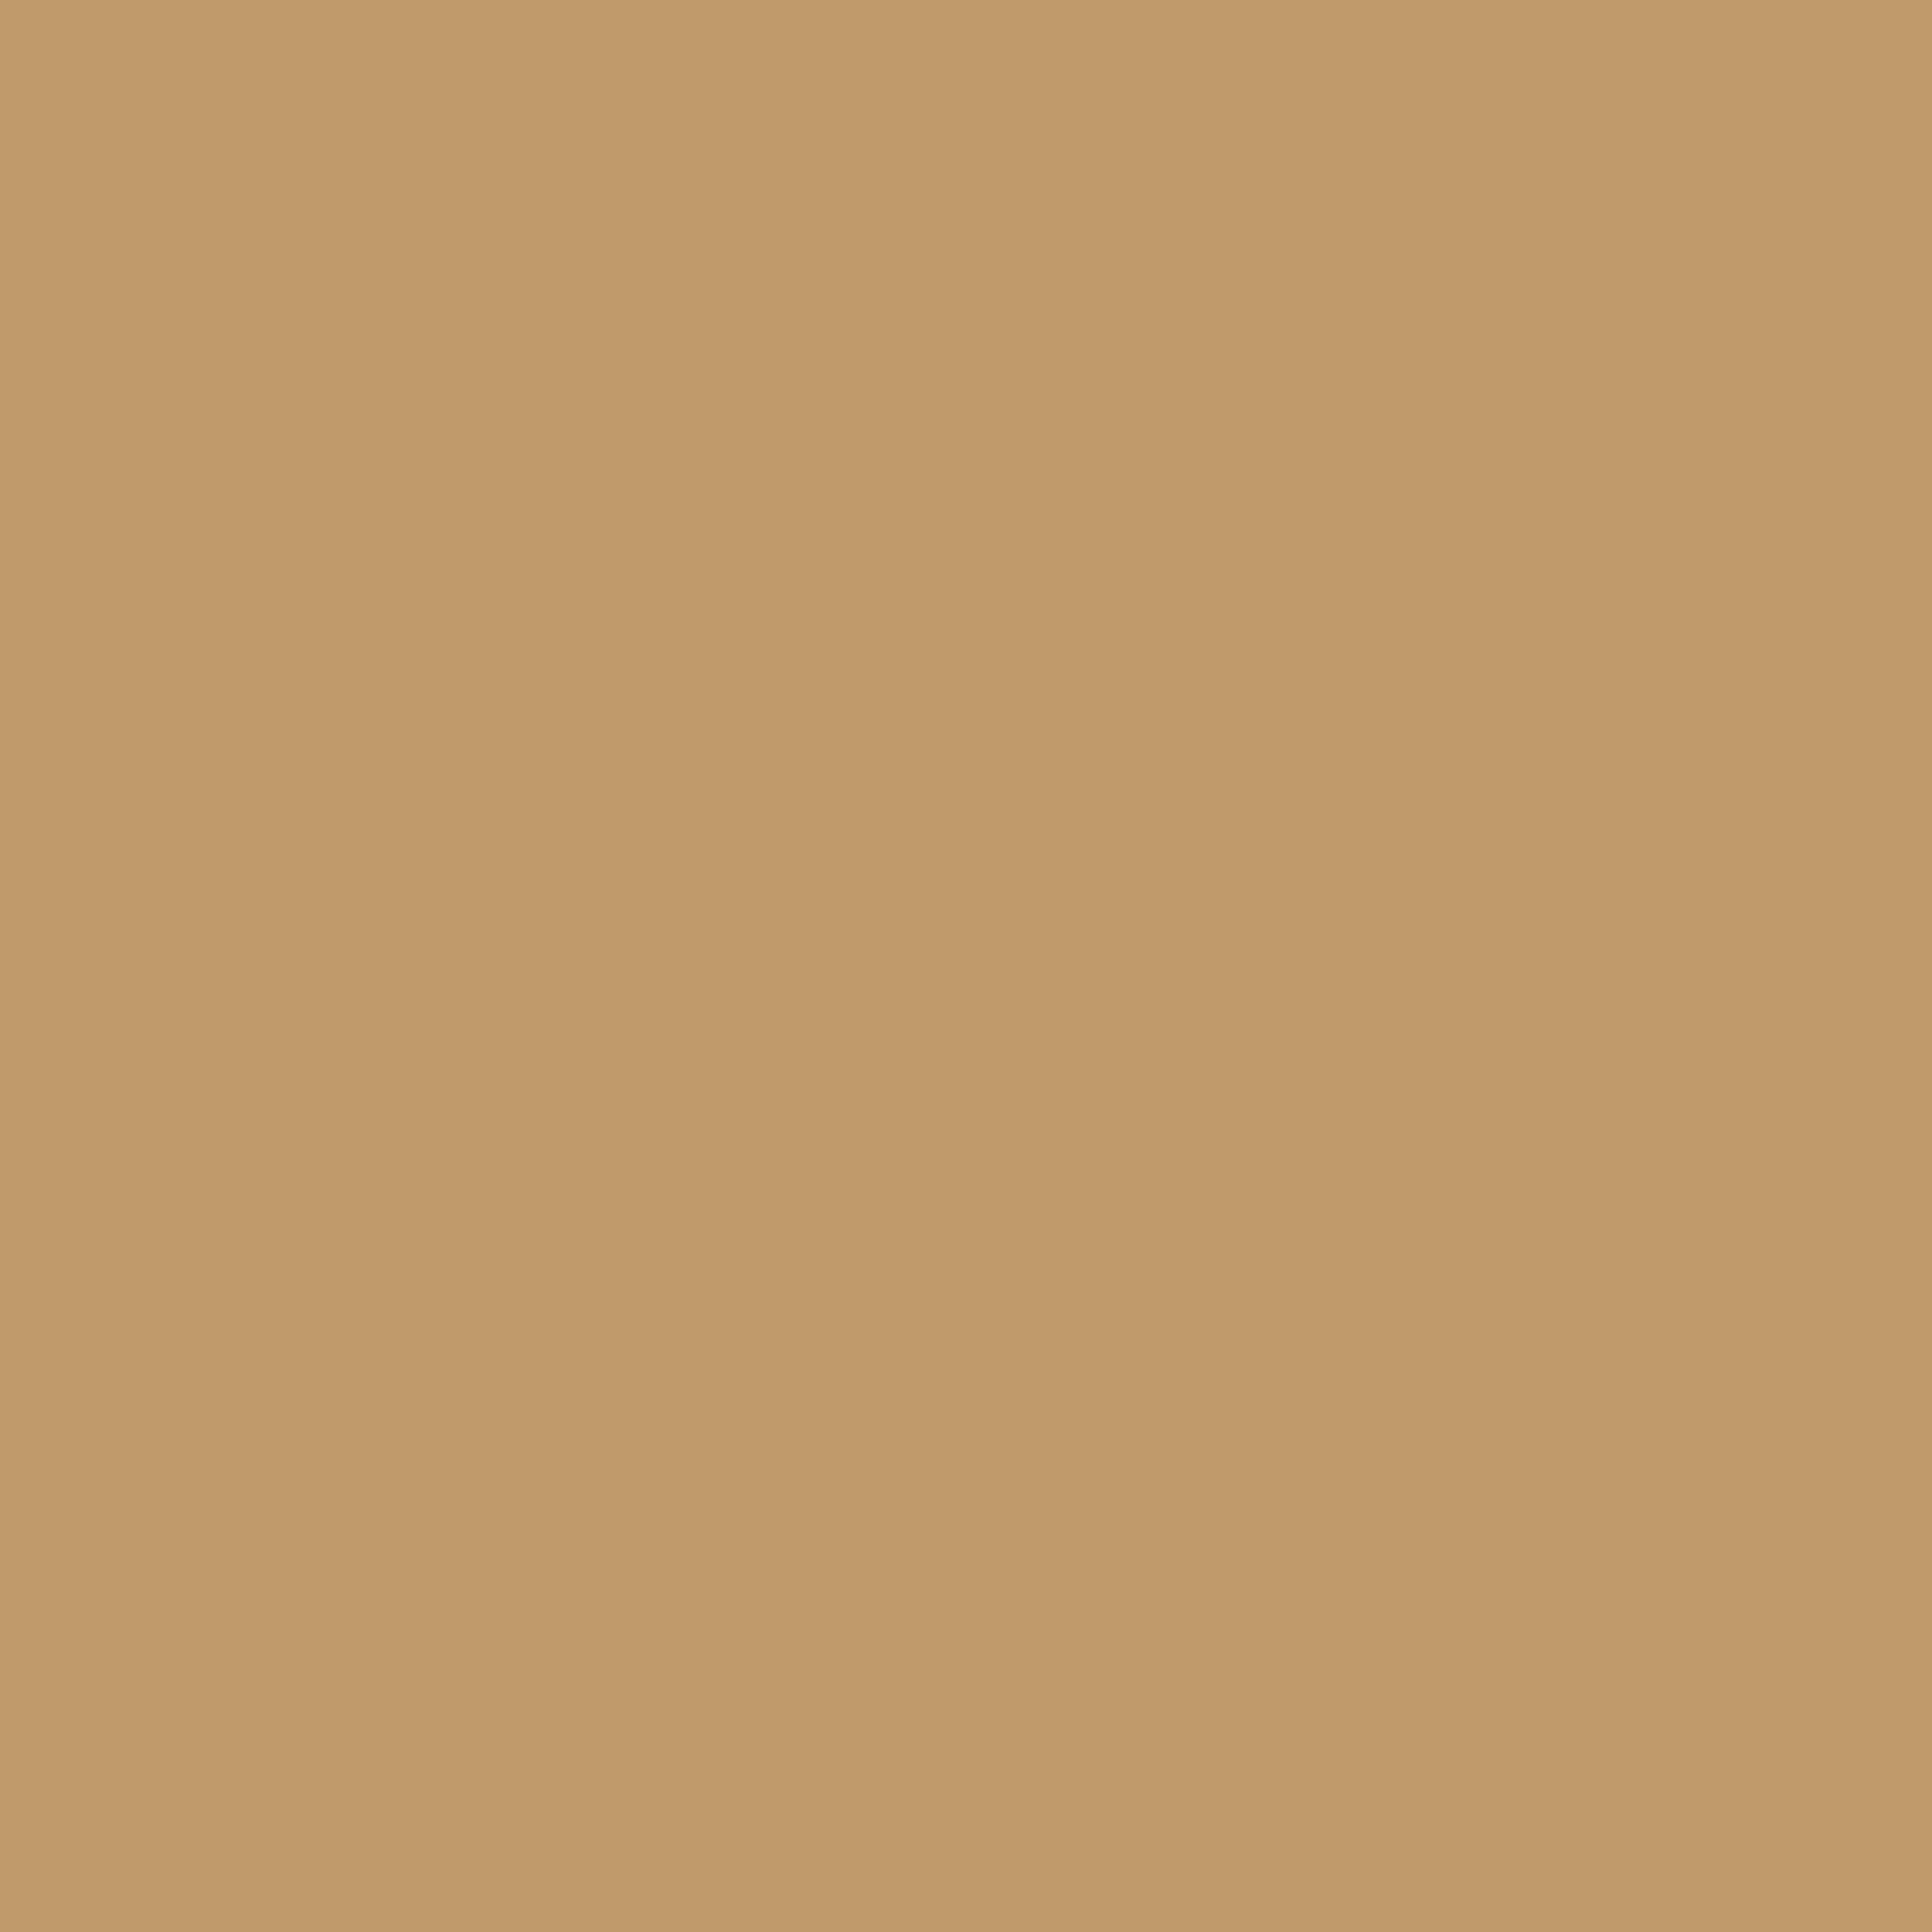 2732x2732 Desert Solid Color Background